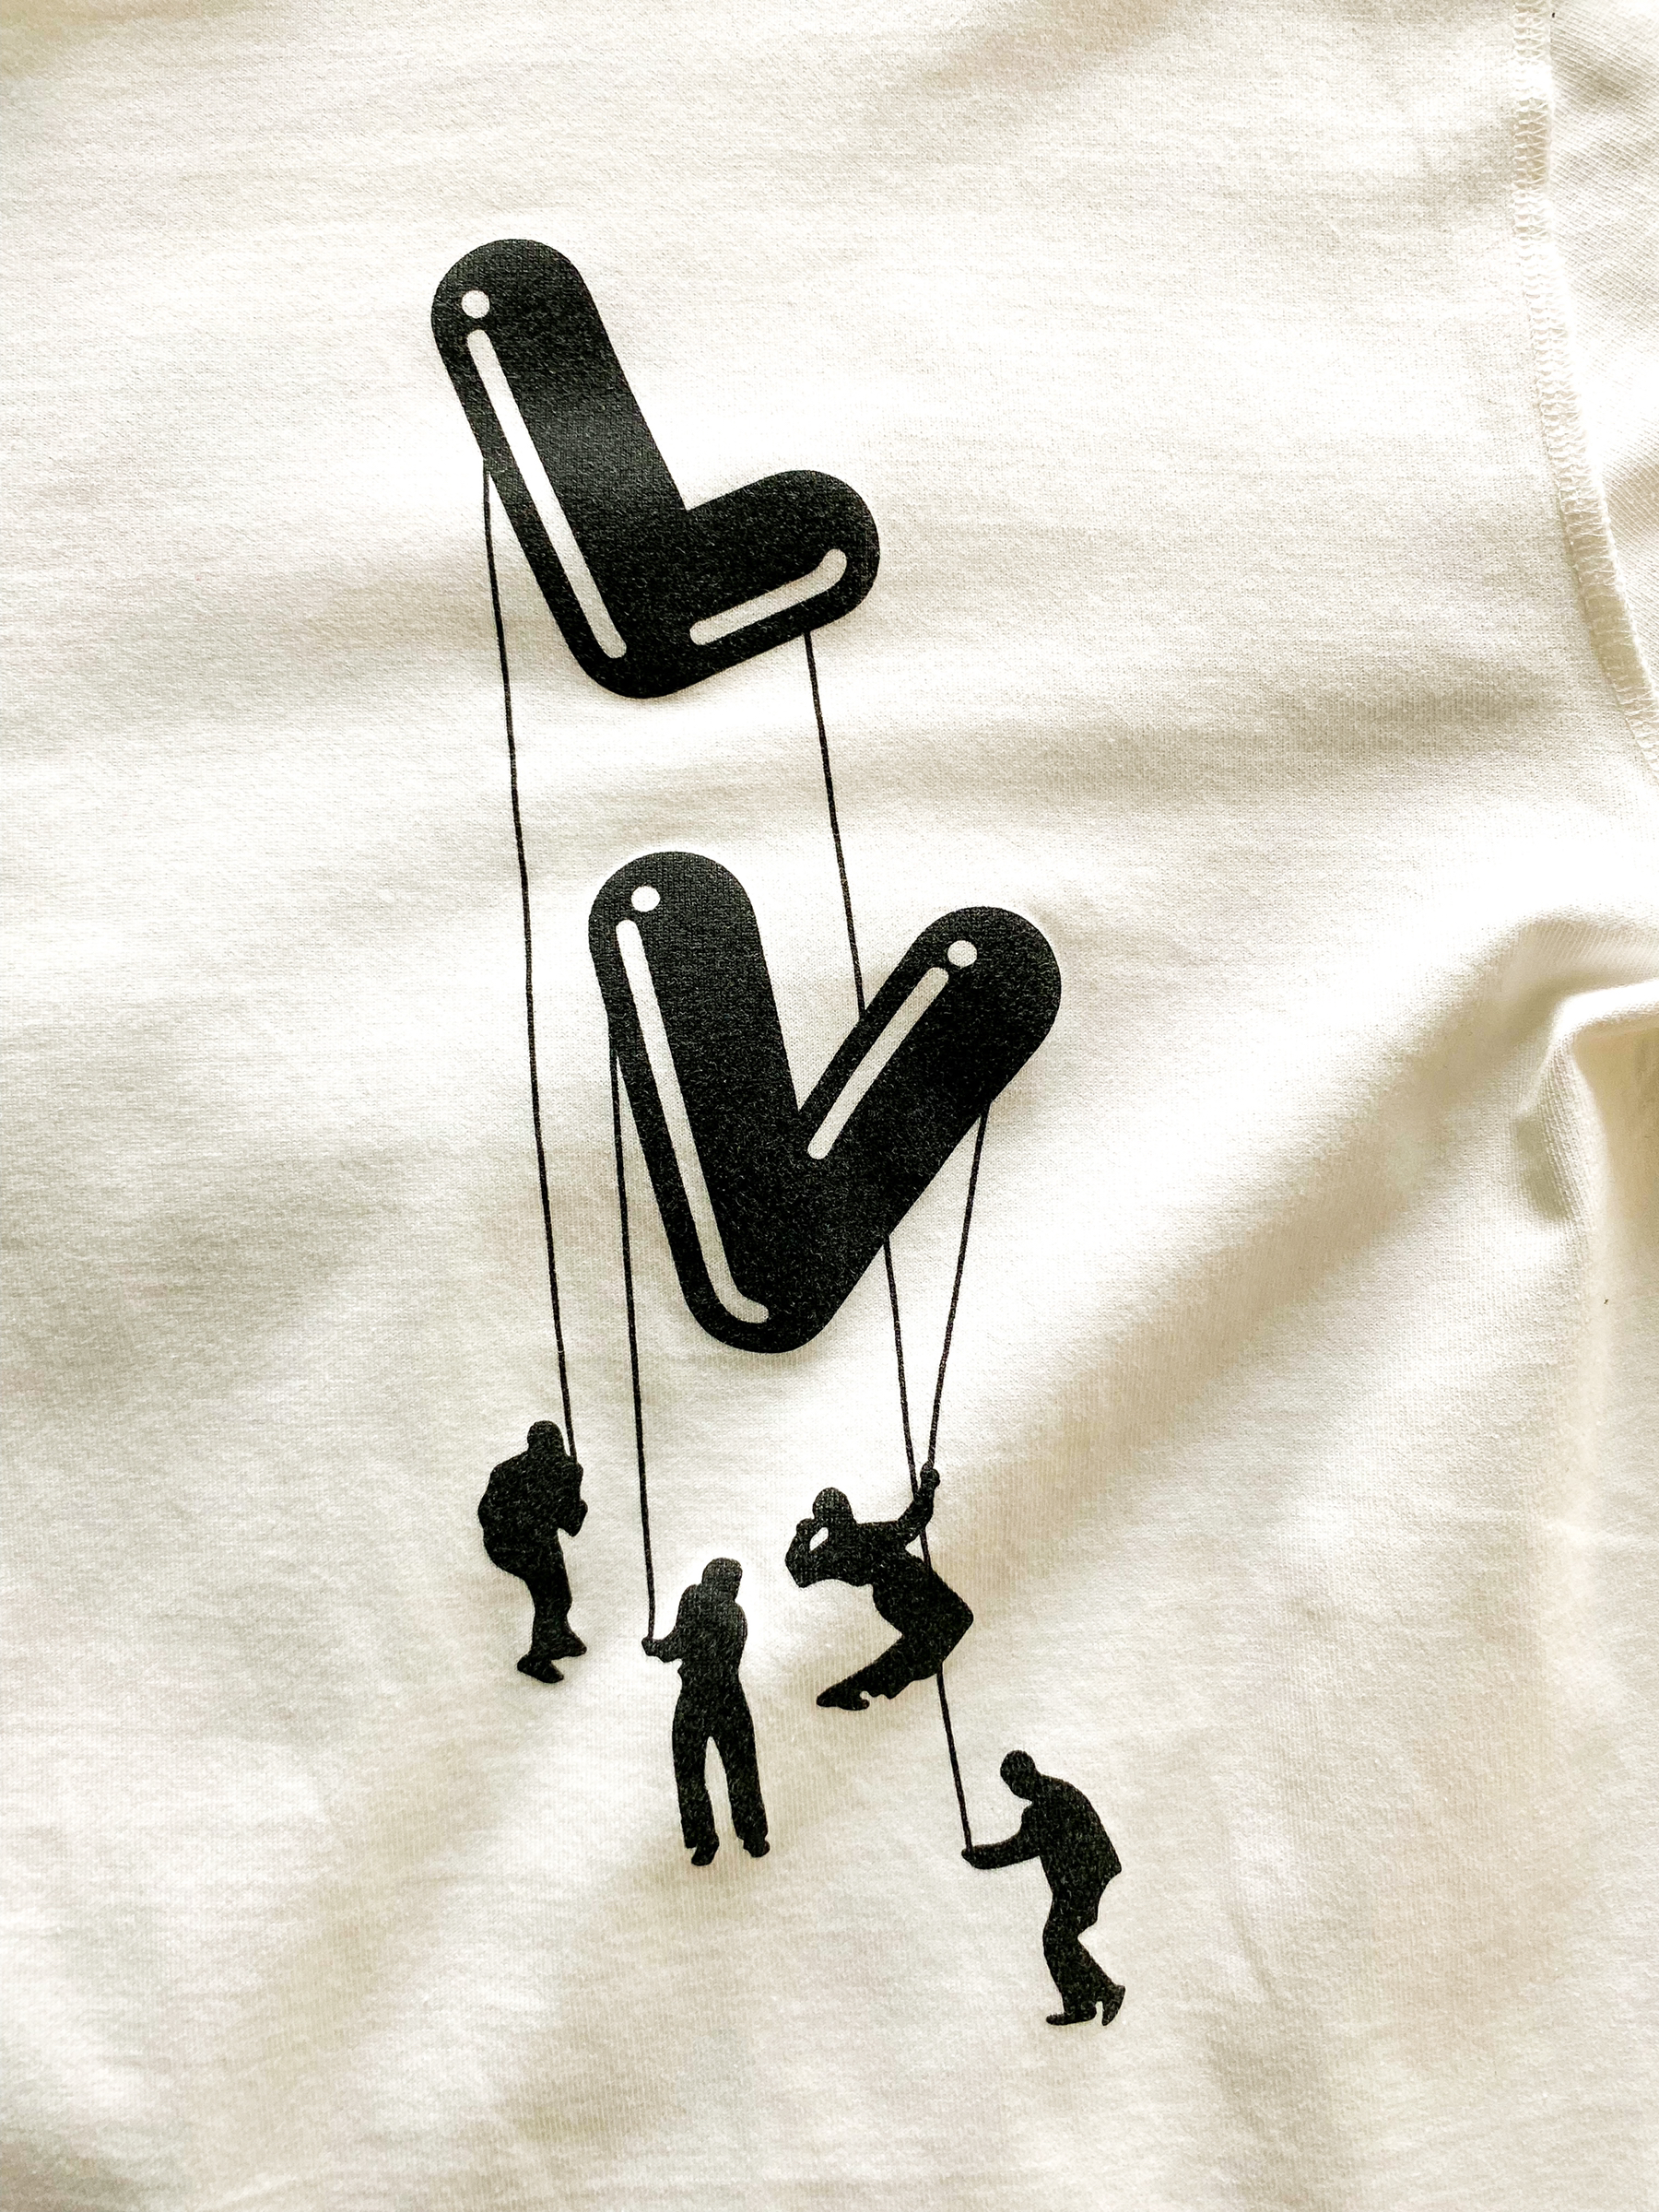 Louis Vuitton Women Floating LV Printed T-Shirt Cotton White Slim Fit -  LULUX